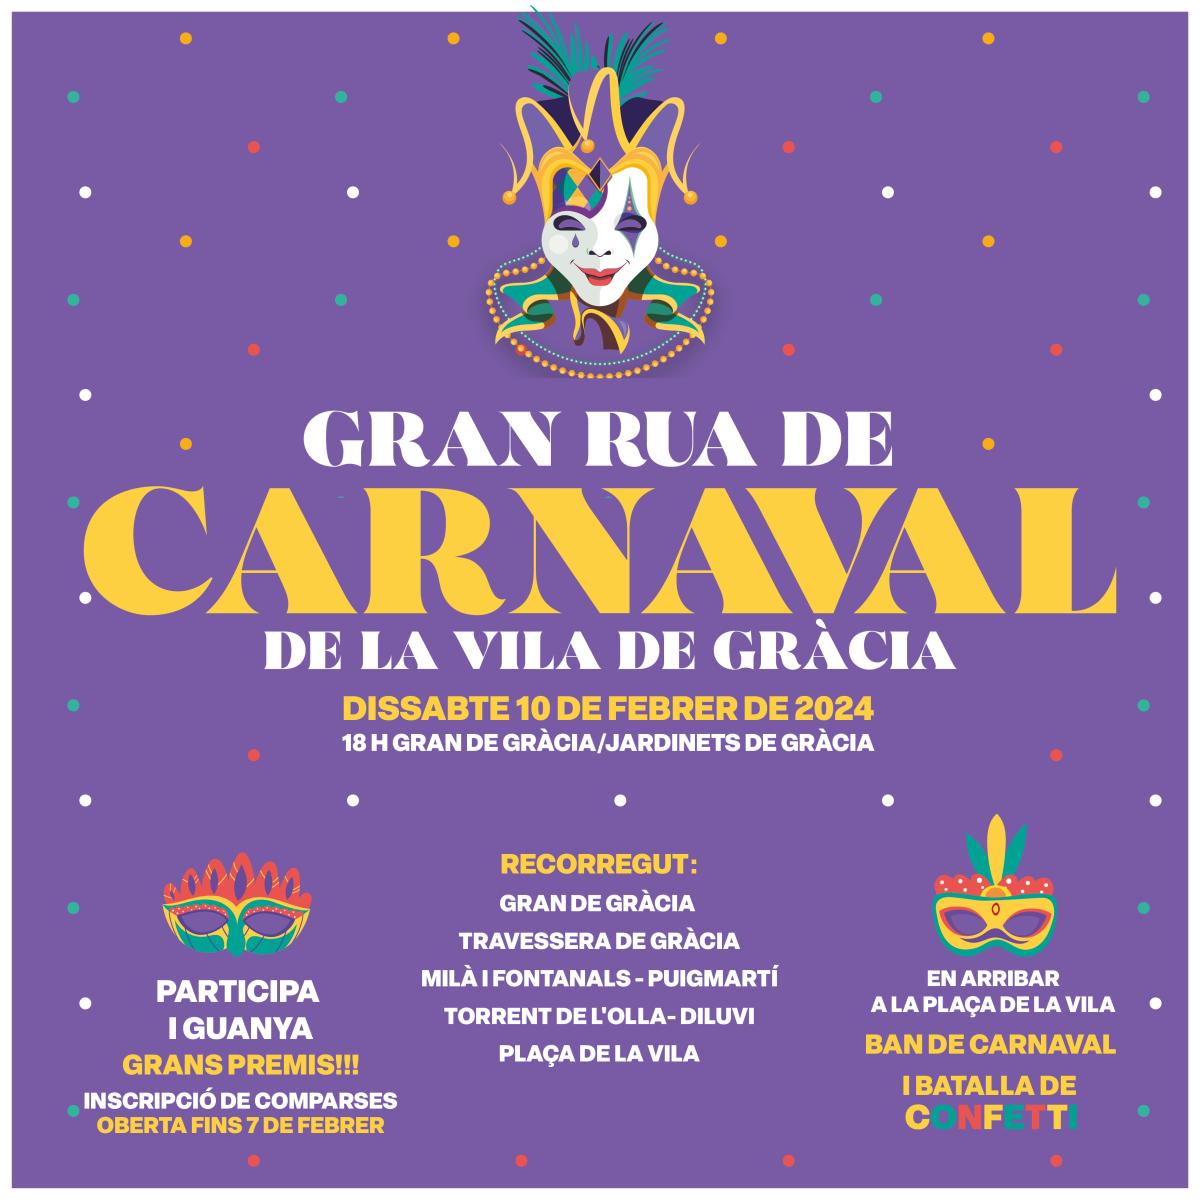 carnaval24, carnaval de gracia, rua de carnaval, festa major de gracia